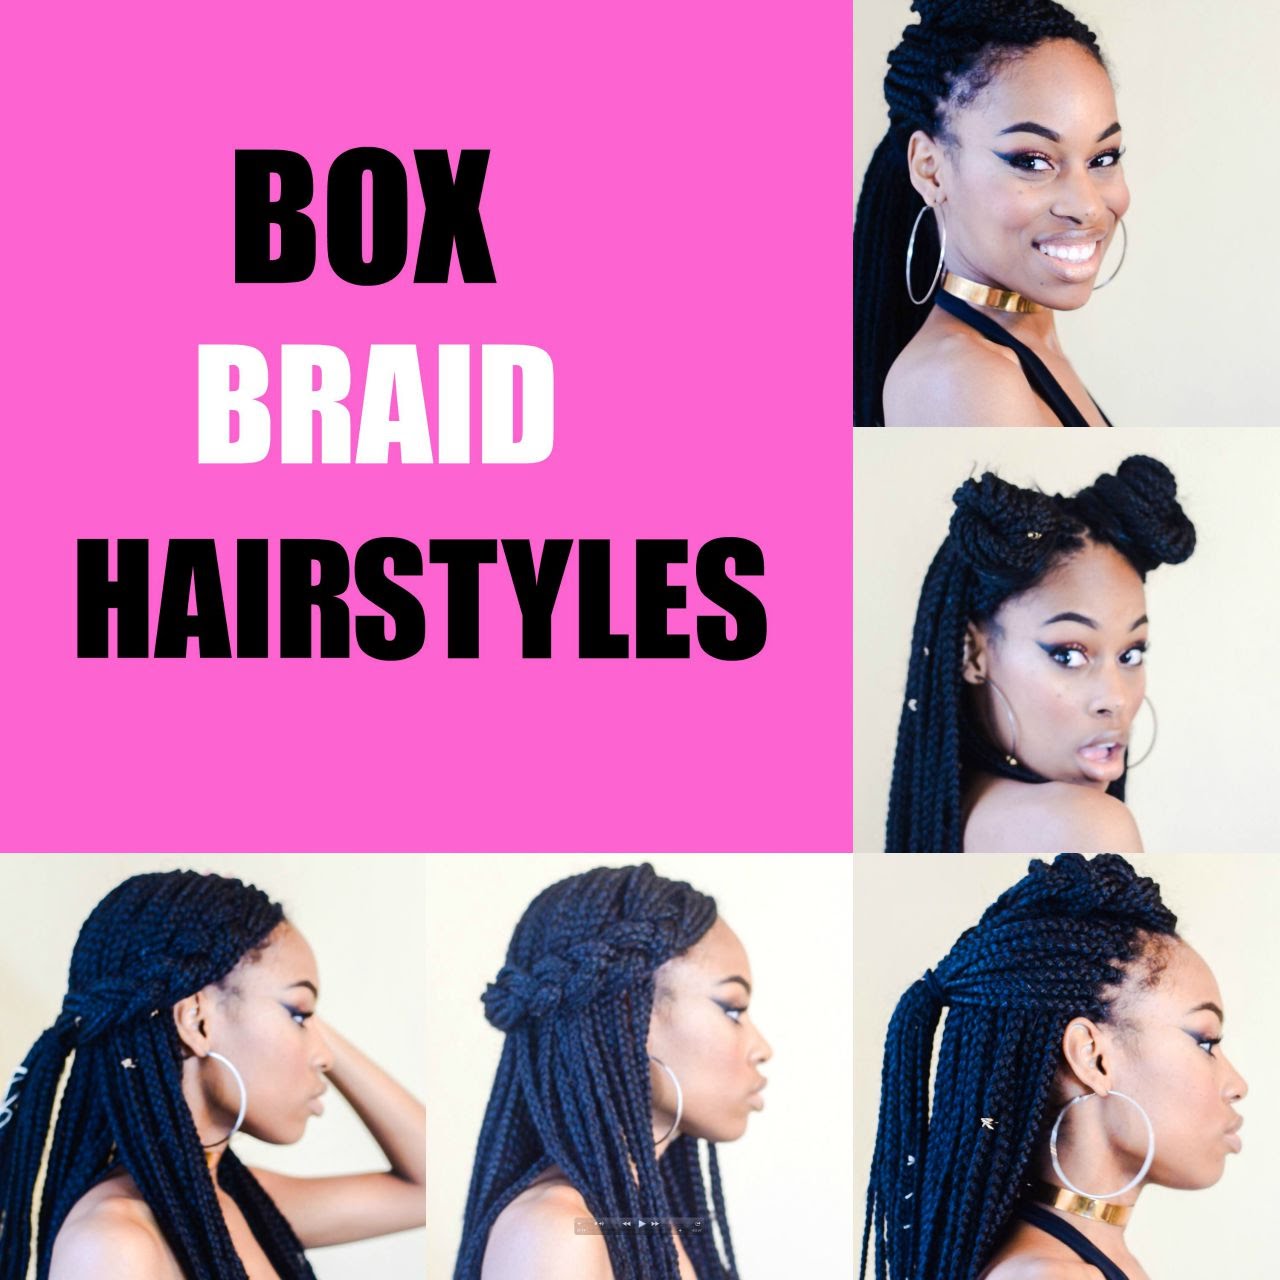 https://voiceofhair.com/wp-content/uploads/2015/08/5-simple-box-braid-hairstyles-th1.jpg